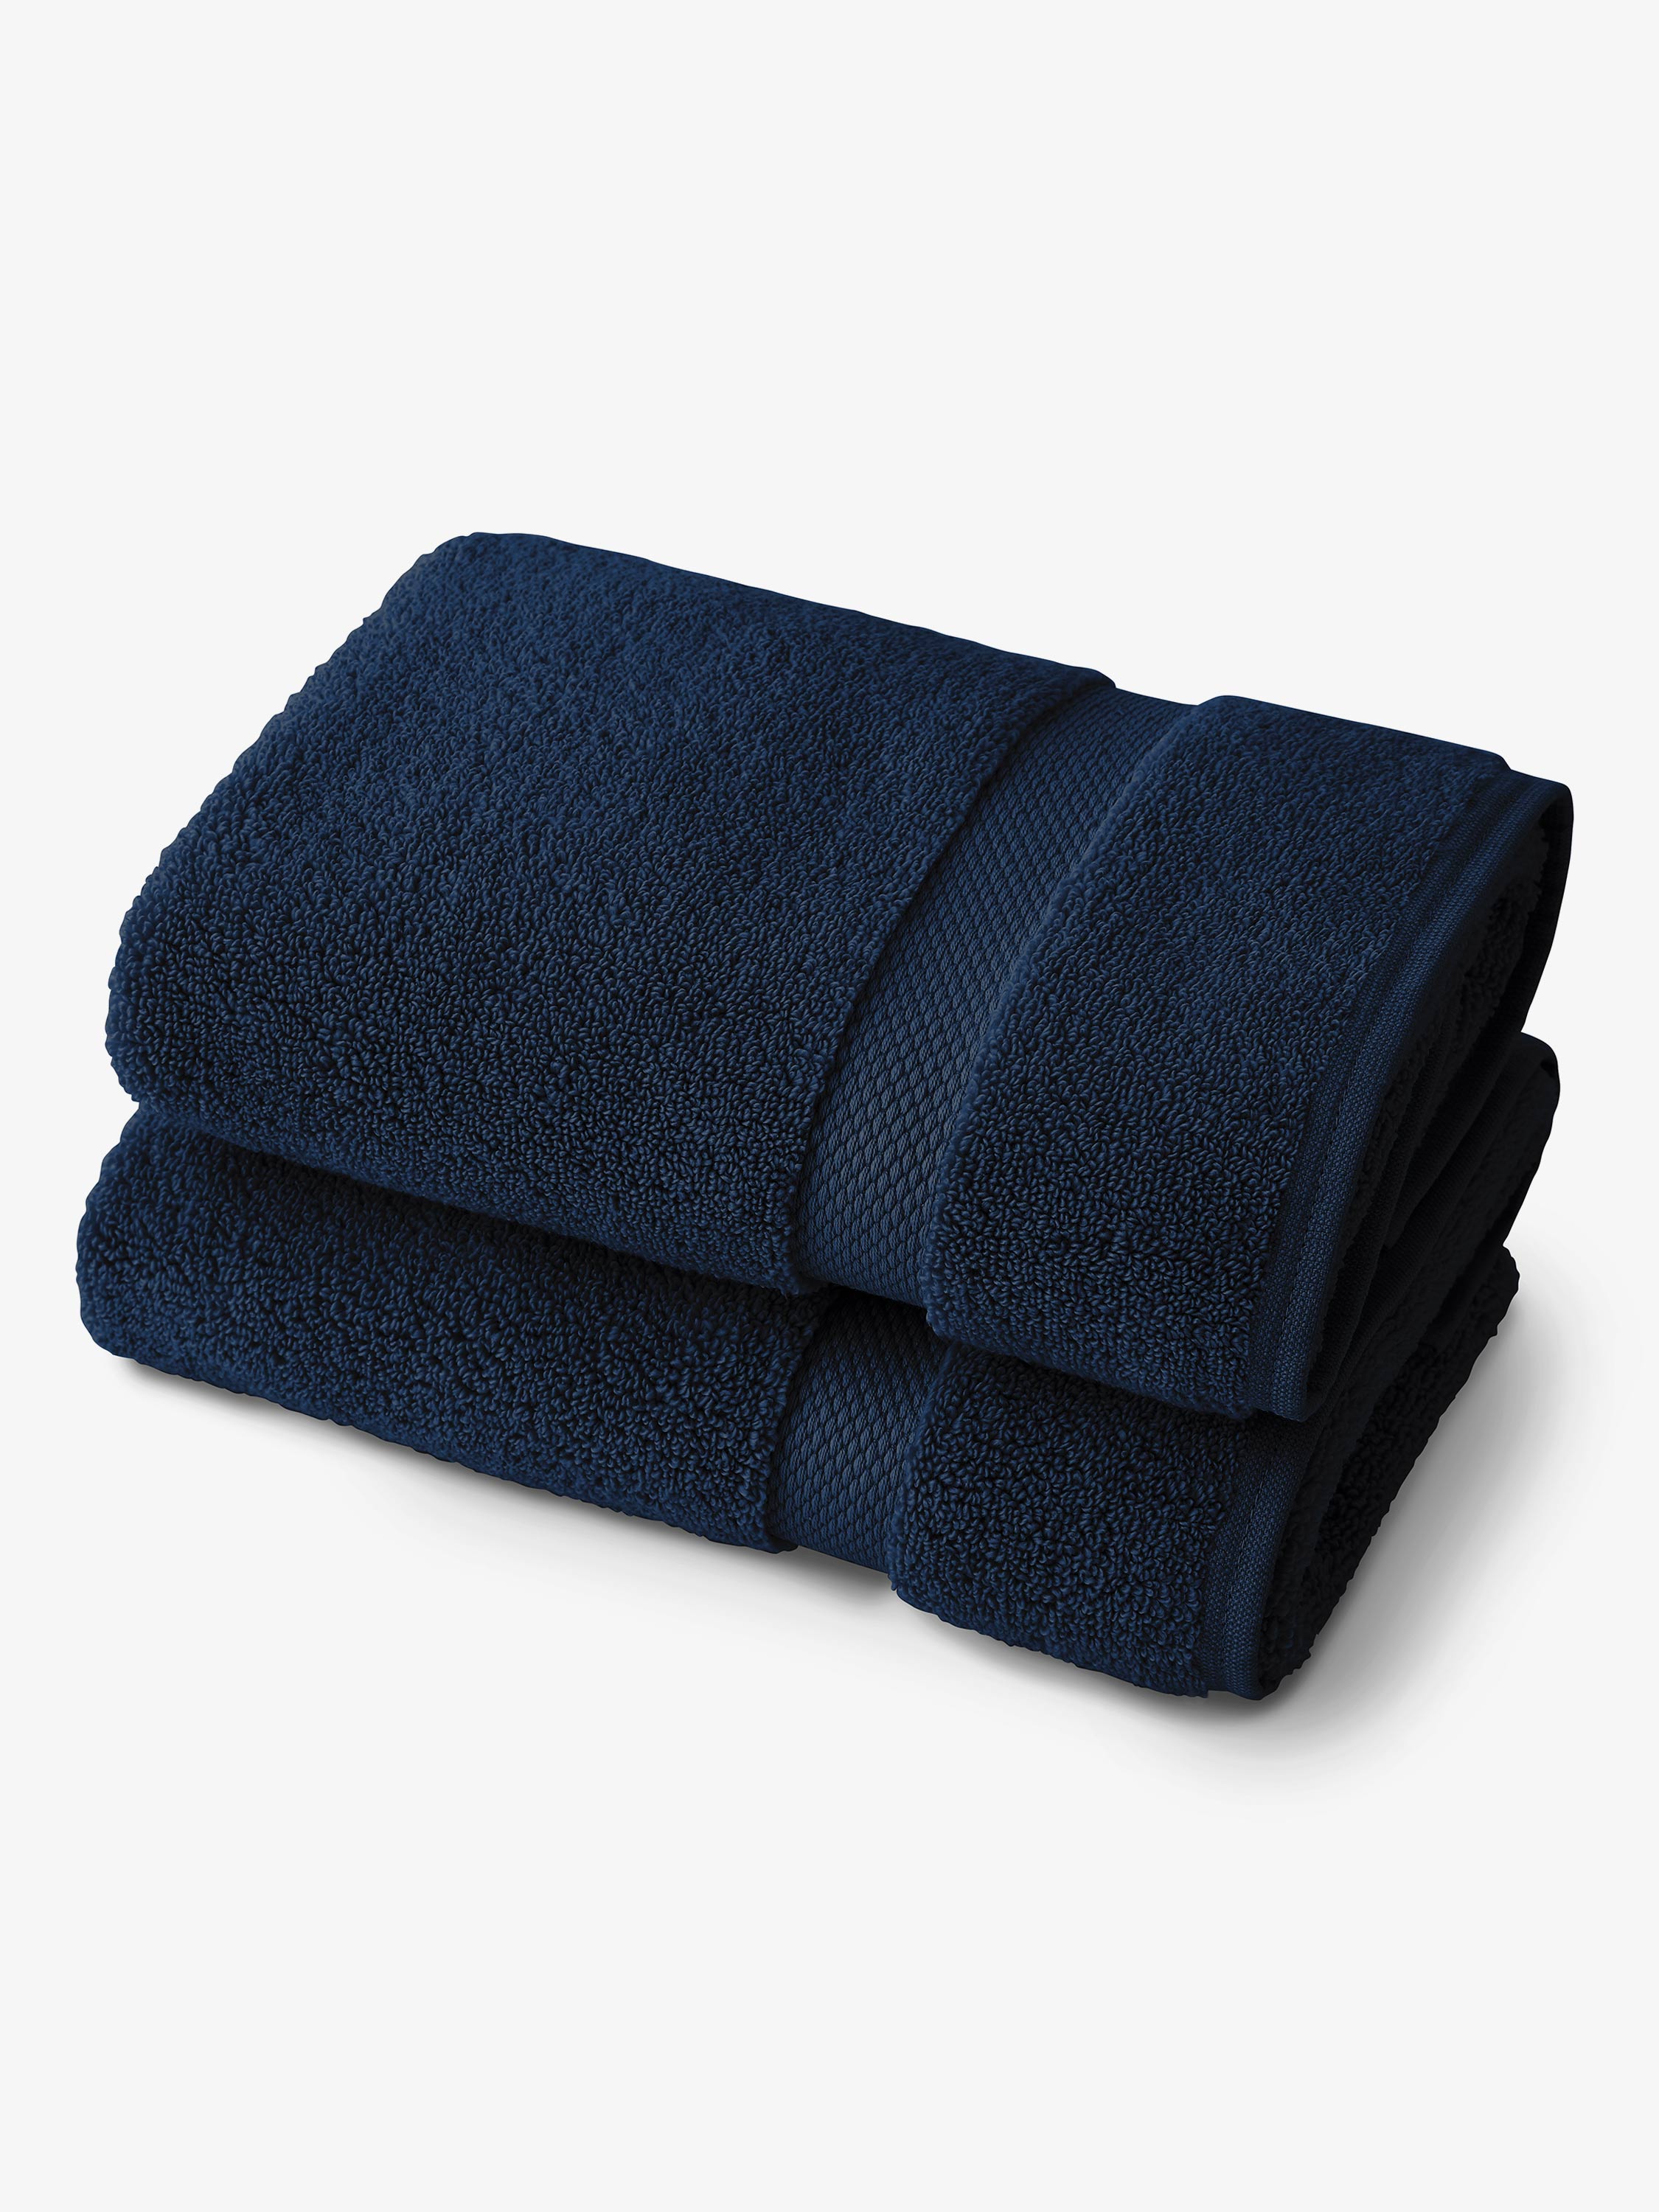 Cotton Bath Sheet - Blue